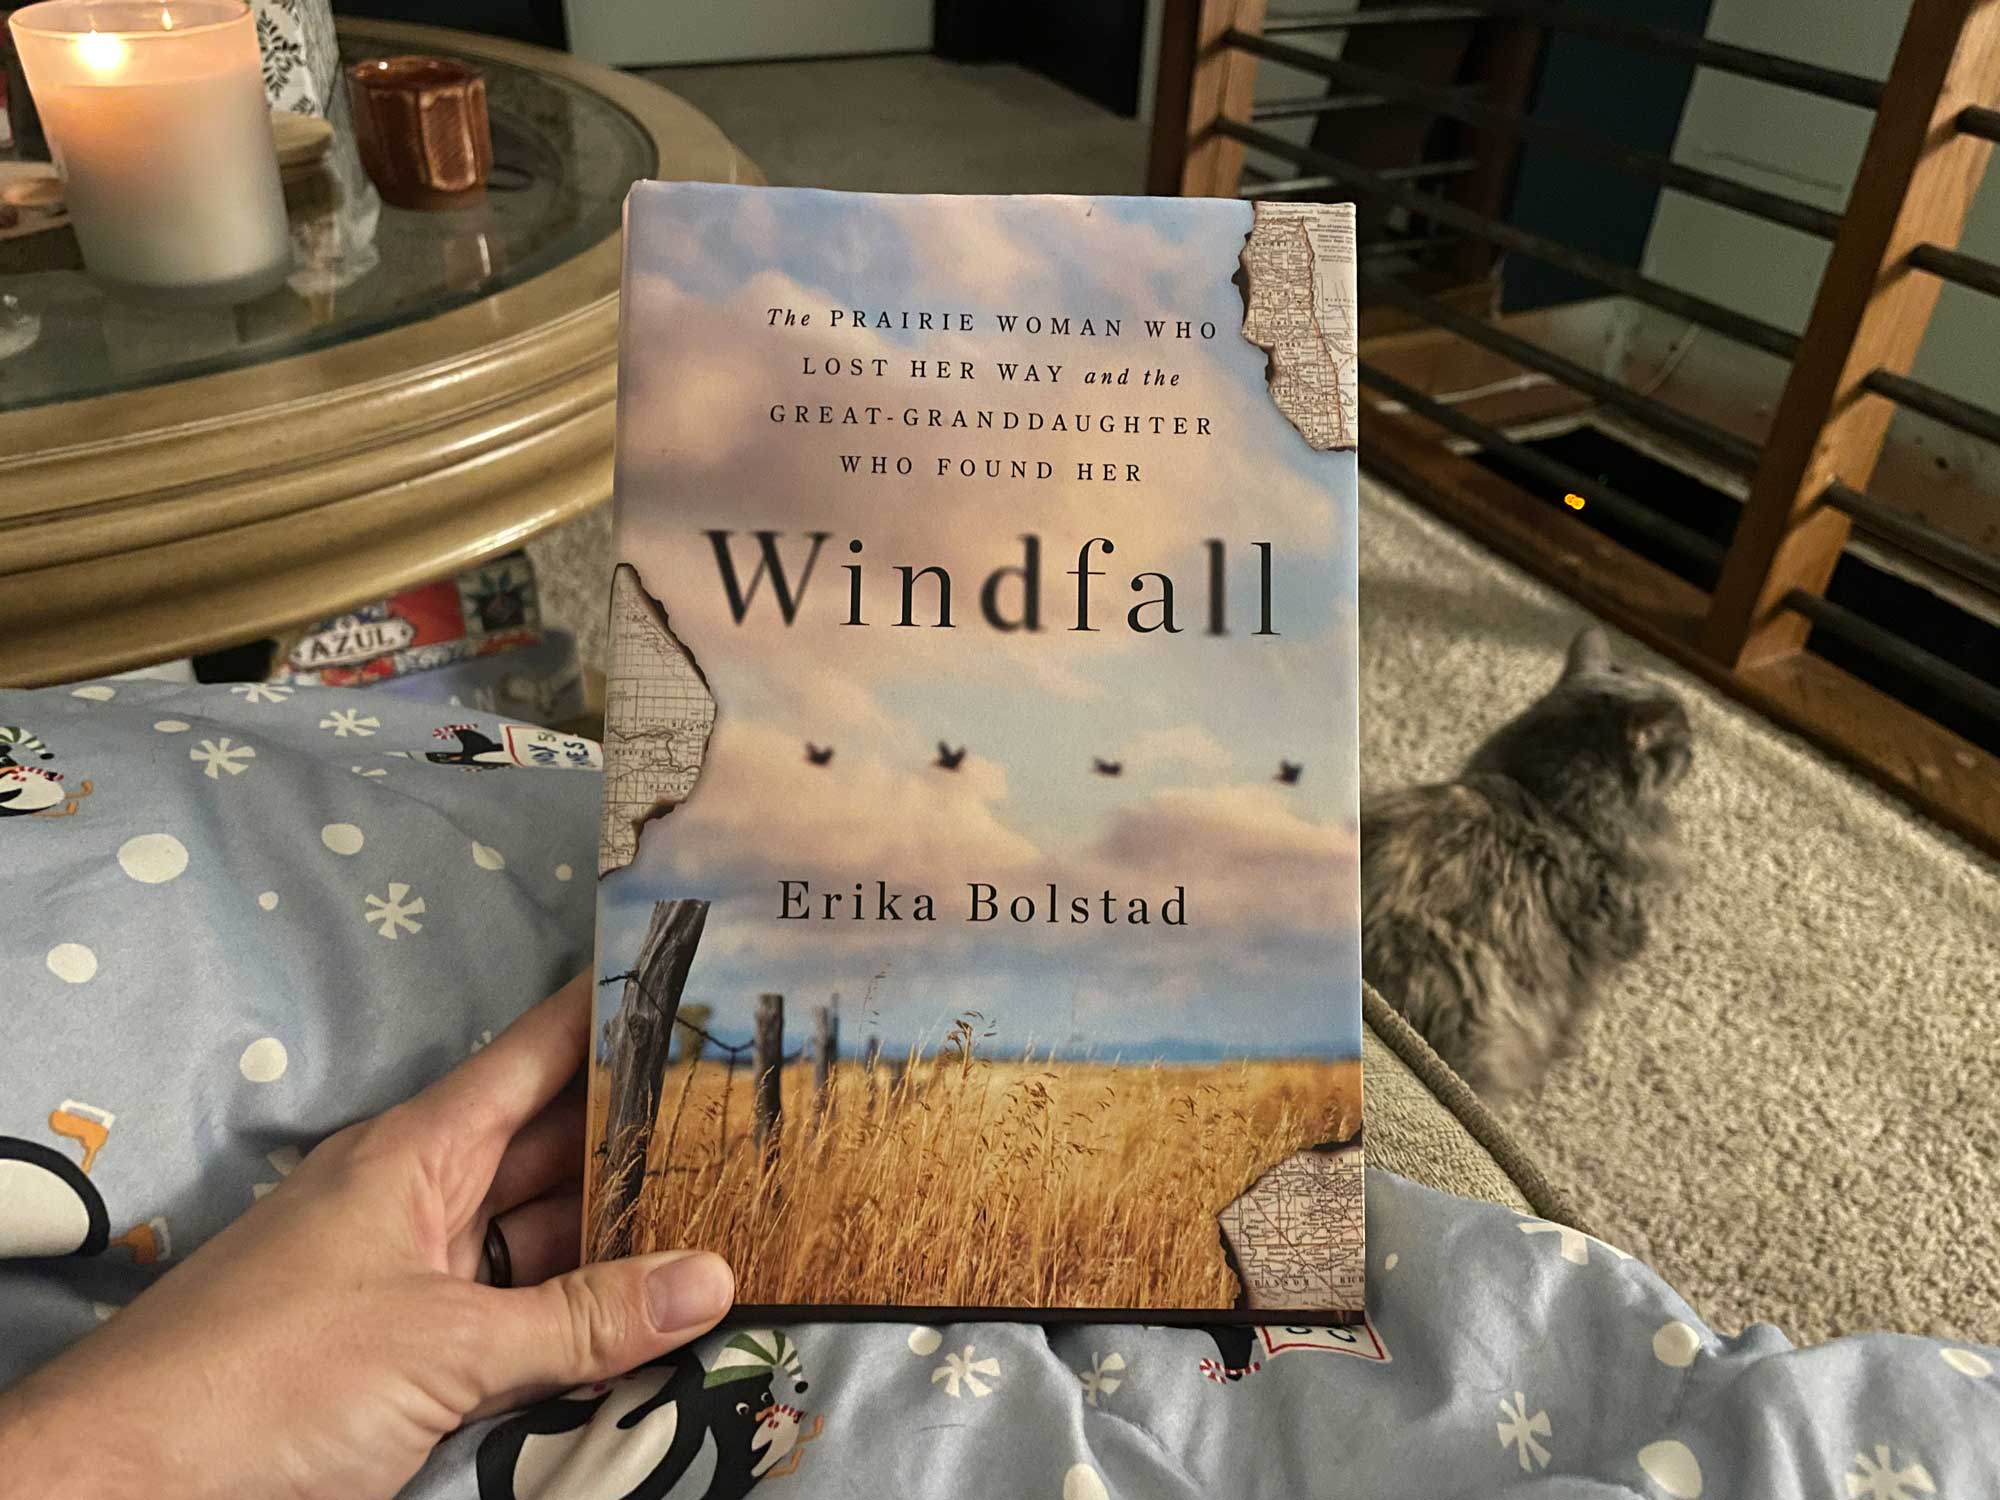 Windfall by Erika Bolstad